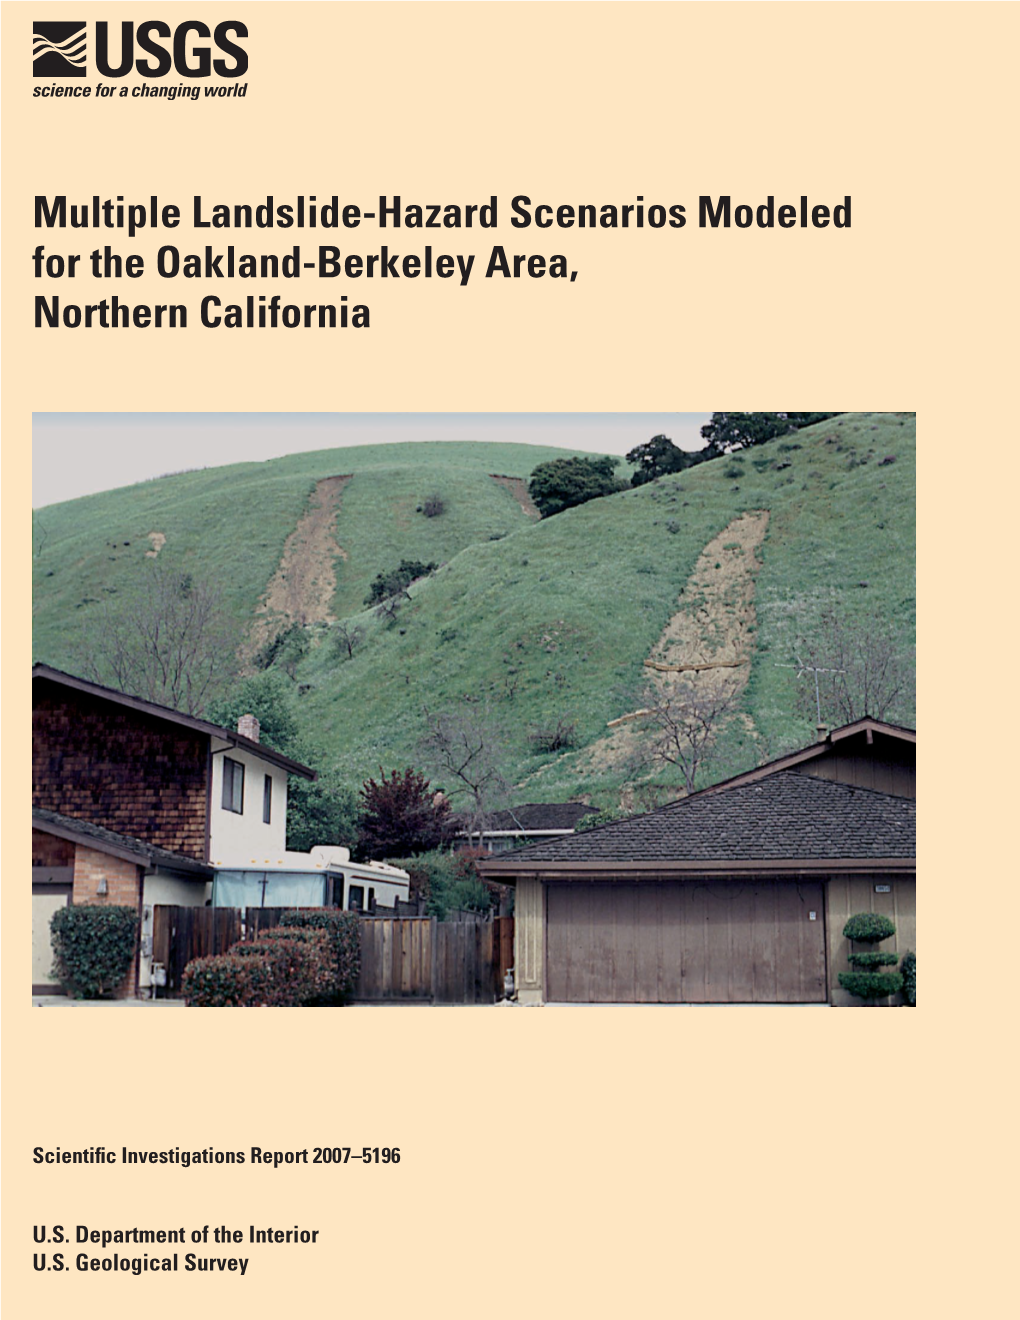 Multiple Landslide-Hazard Scenarios Modeled for the Oakland-Berkeley Area, Northern California